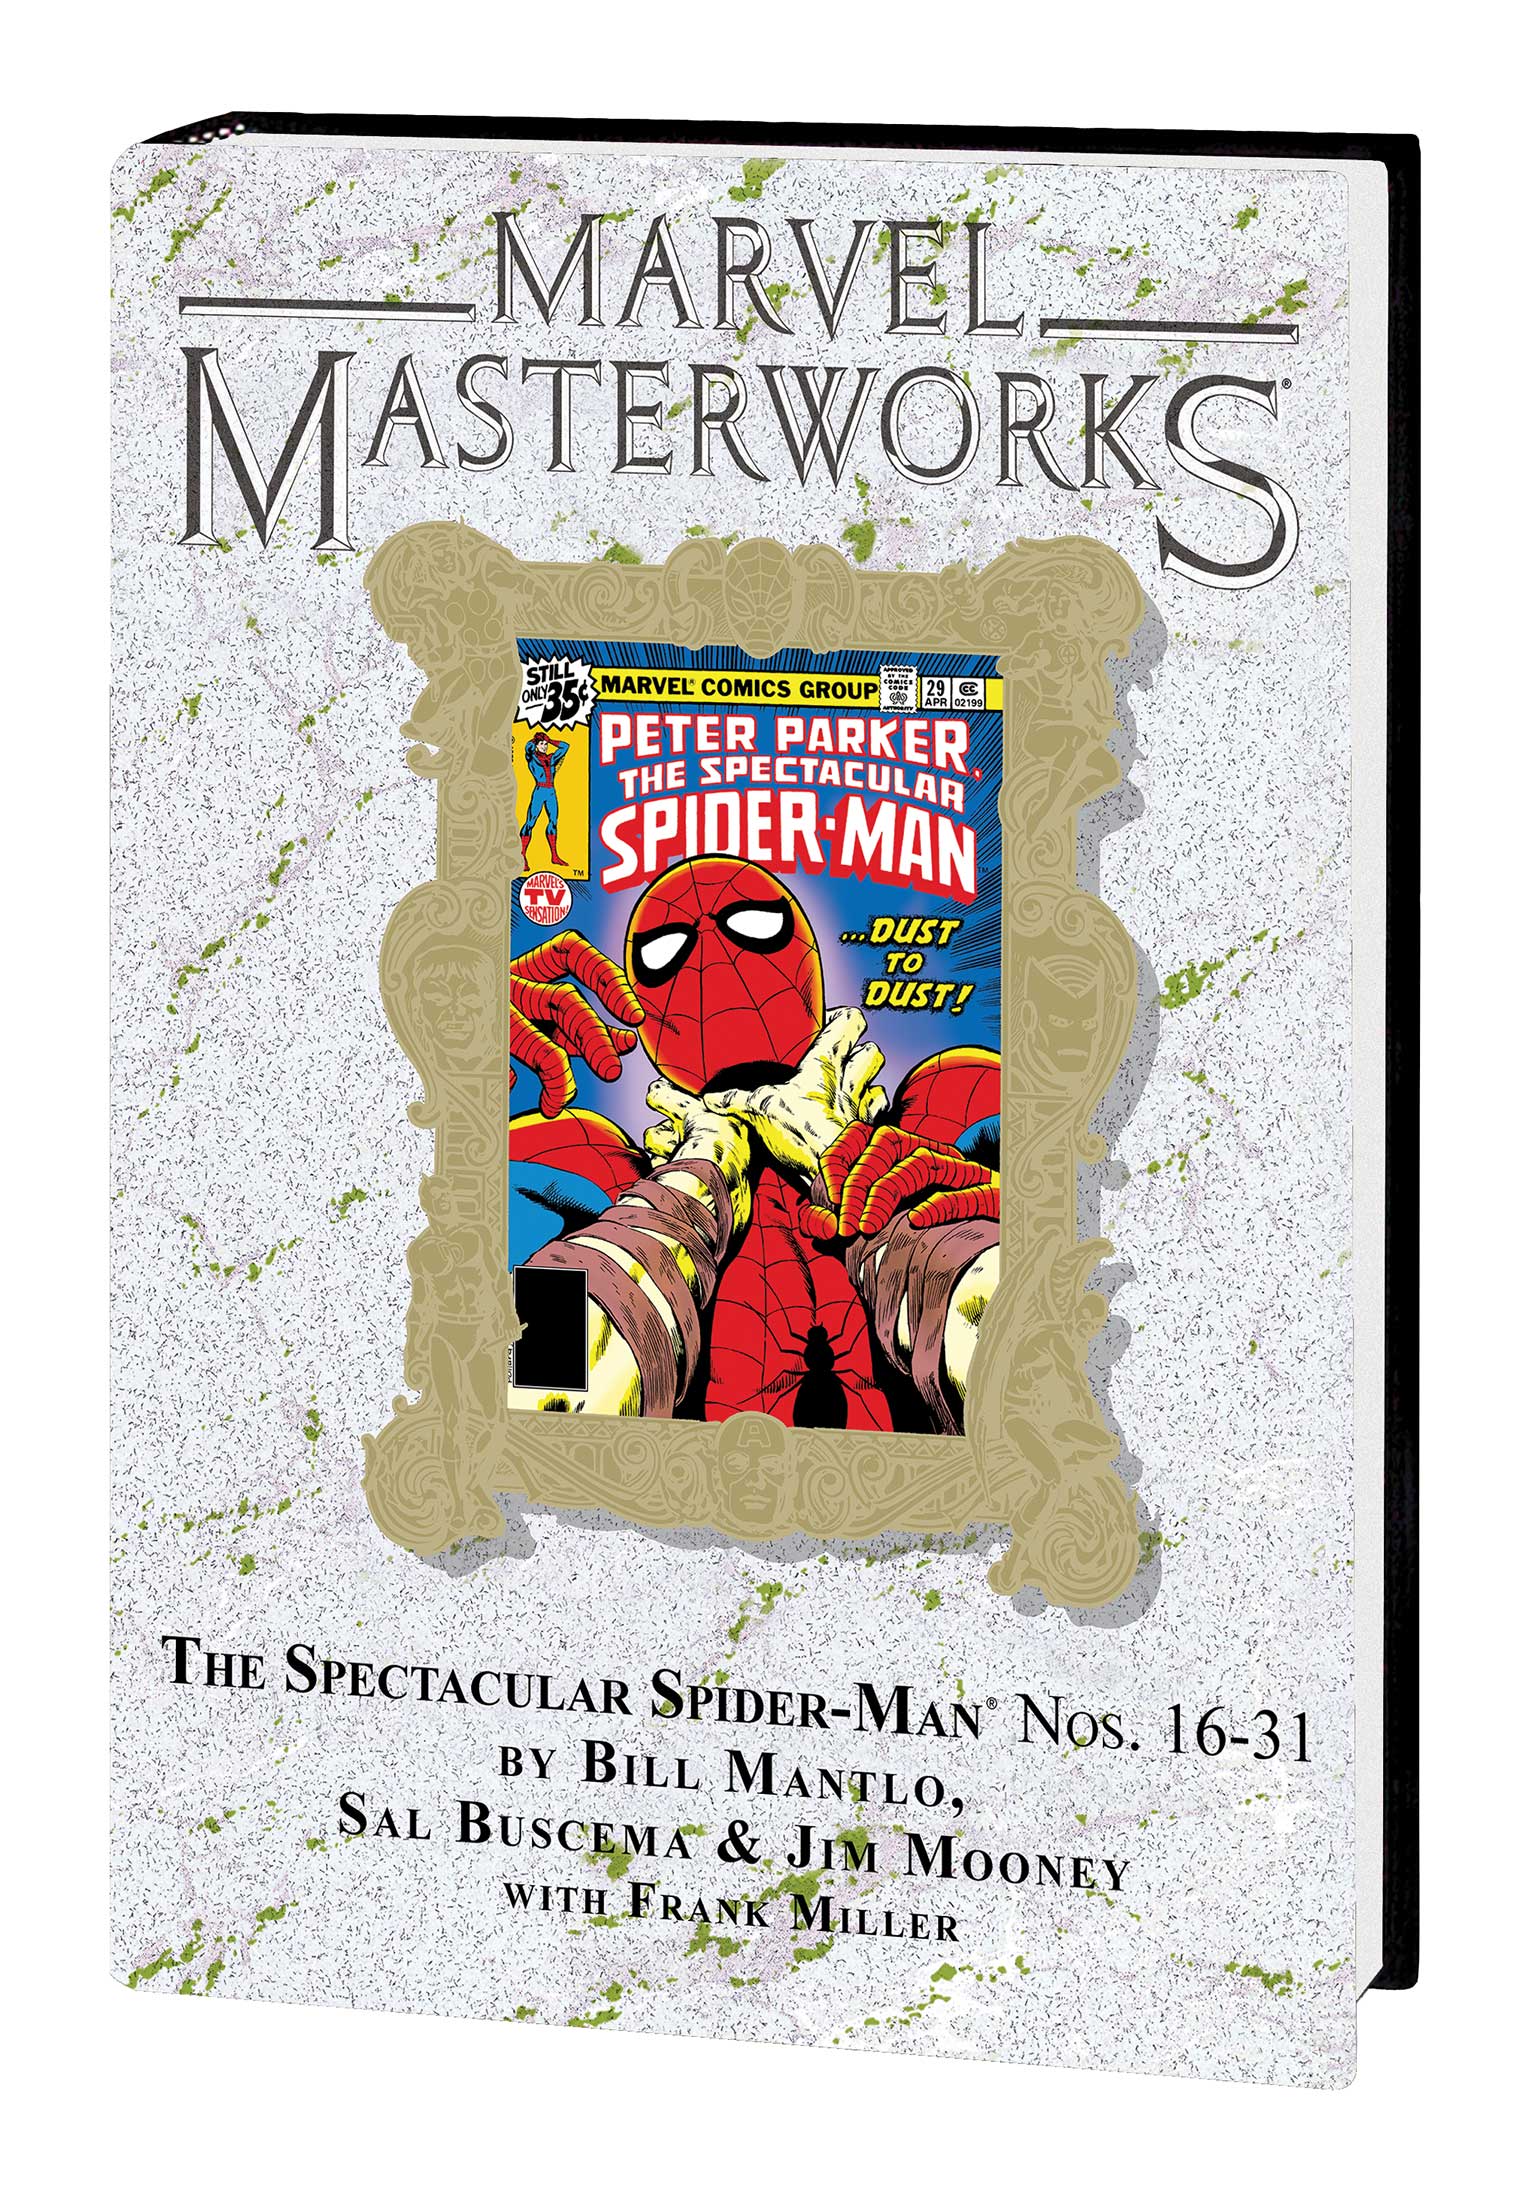 Marvel Masterworks: The Spectacular Spider-Man Vol. 2